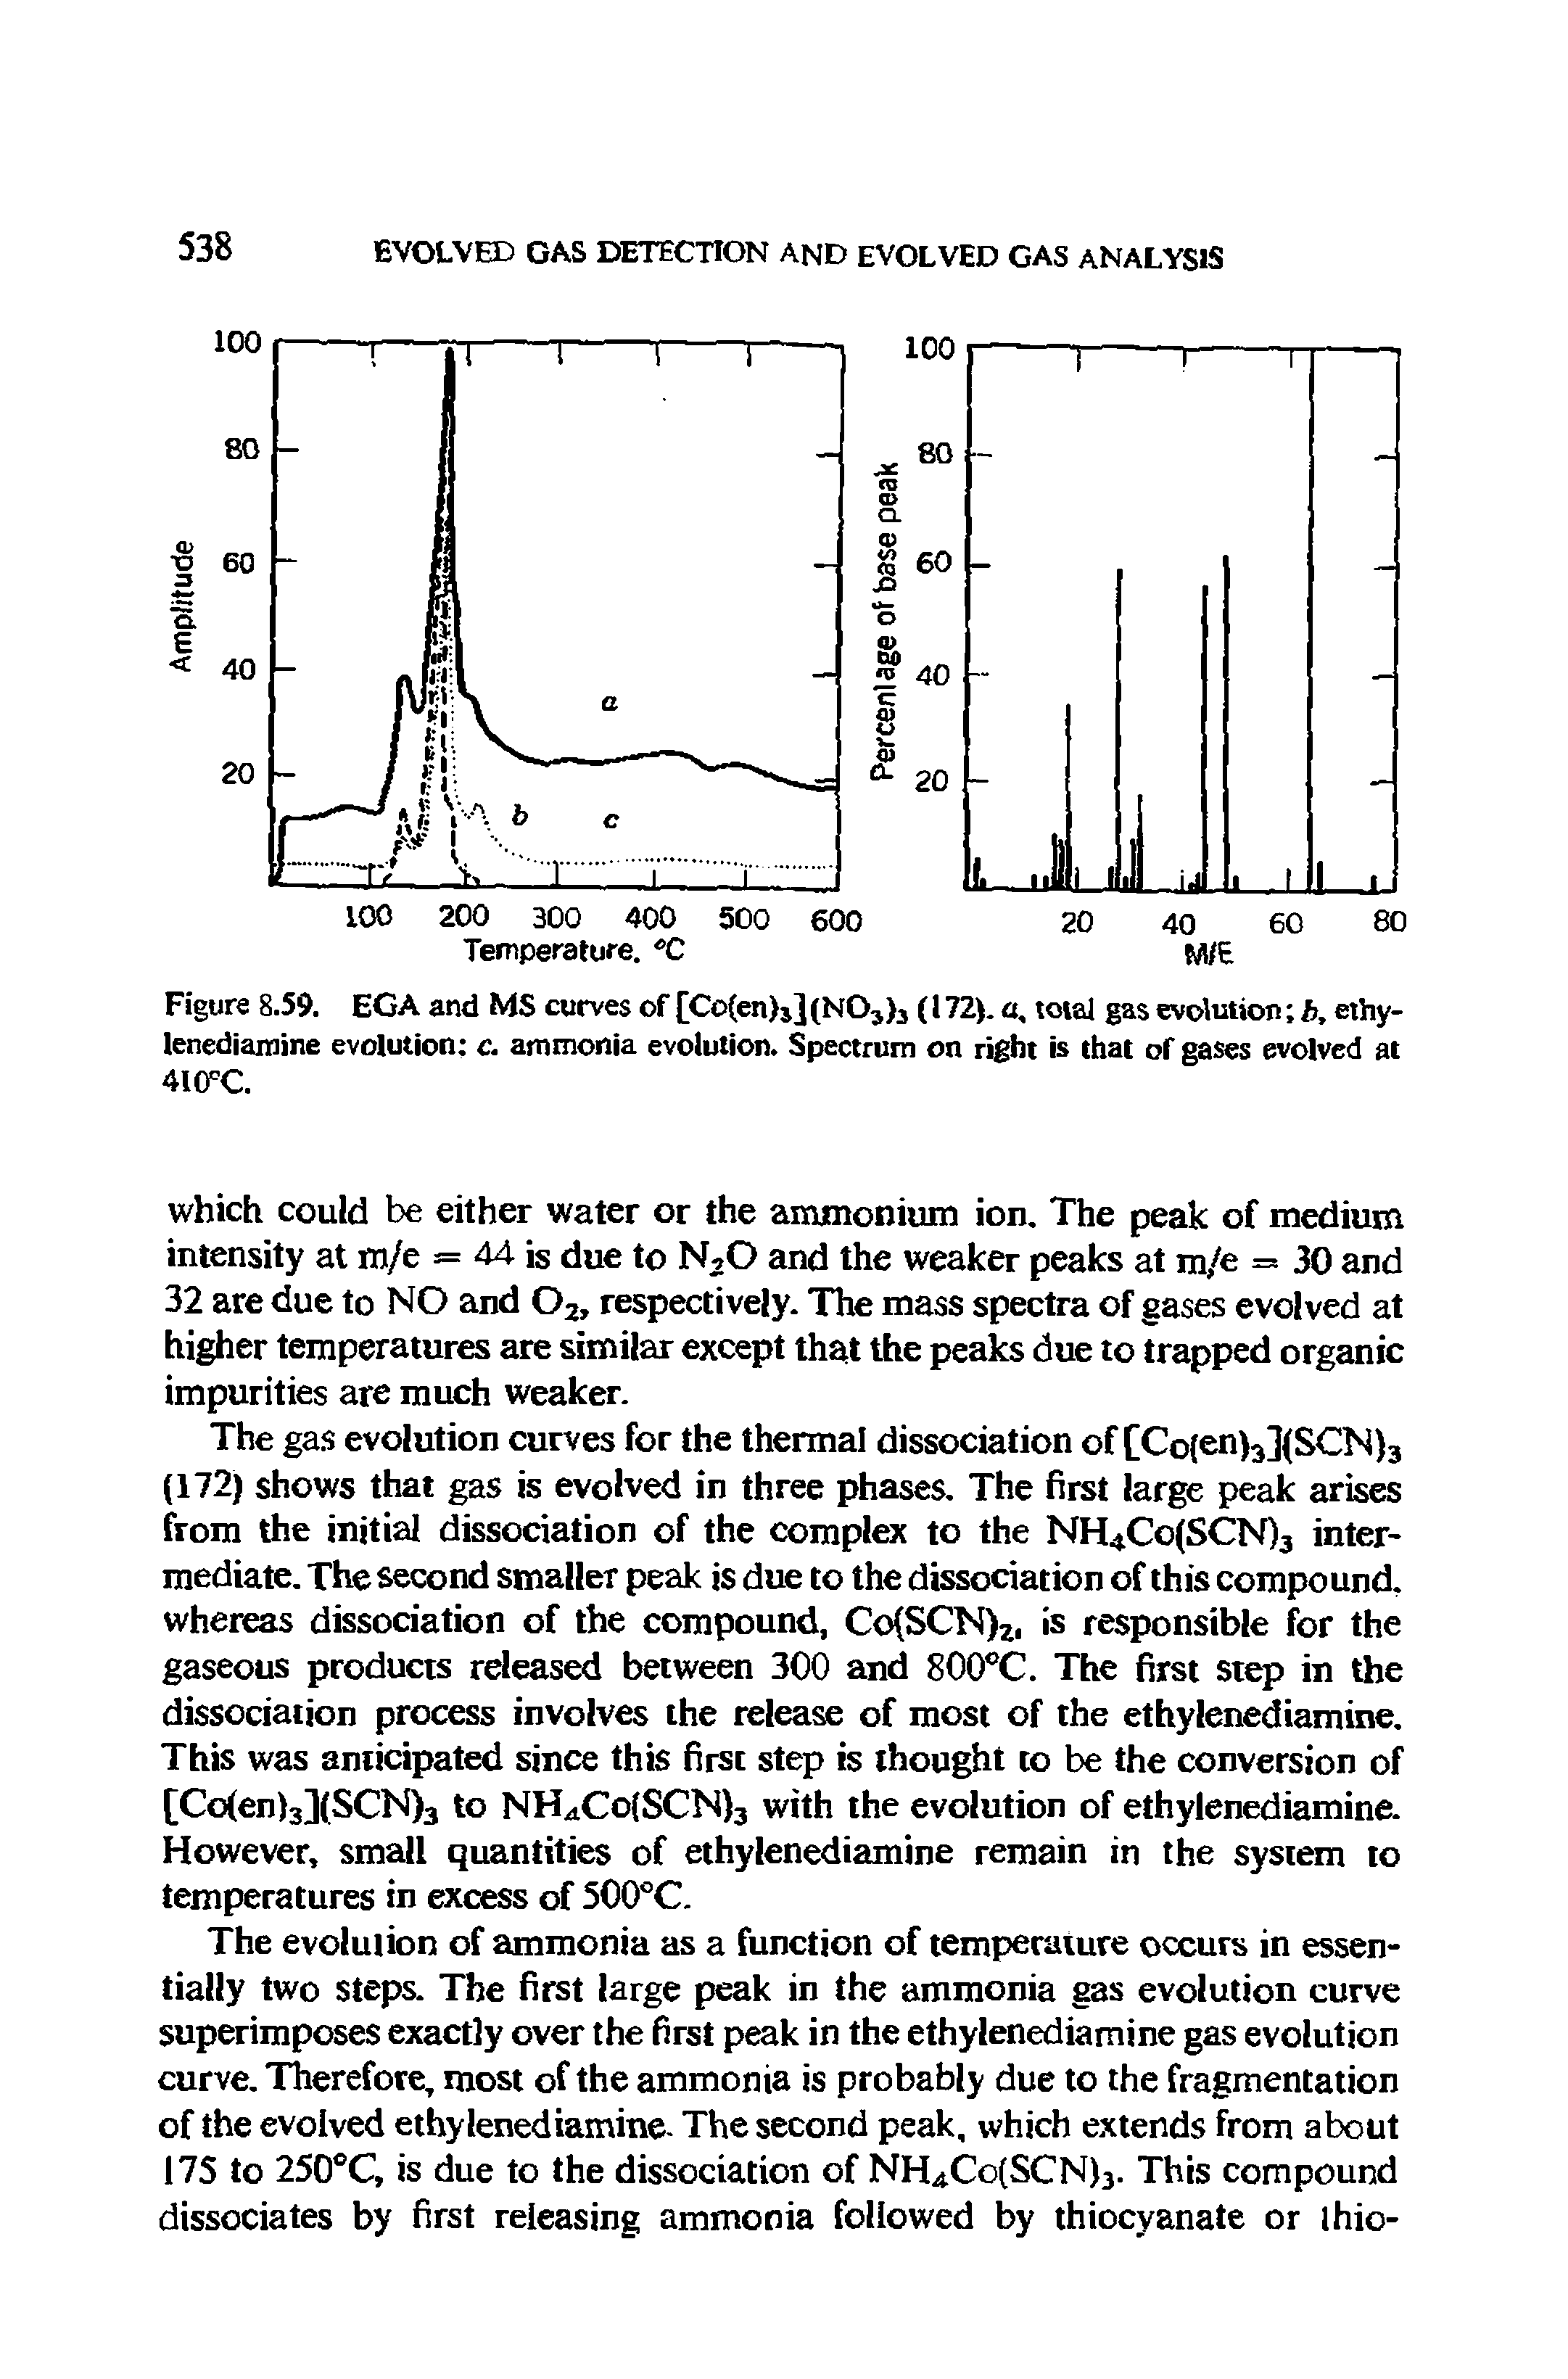 Figure 8.59. EGA and MS curves of Co(en)j] (N03)3 (172). a, total gas evolution b, ethy-lenediainine evolution c. ammonia evolution. Spectrum on right is that of gases evolved at 410°C.